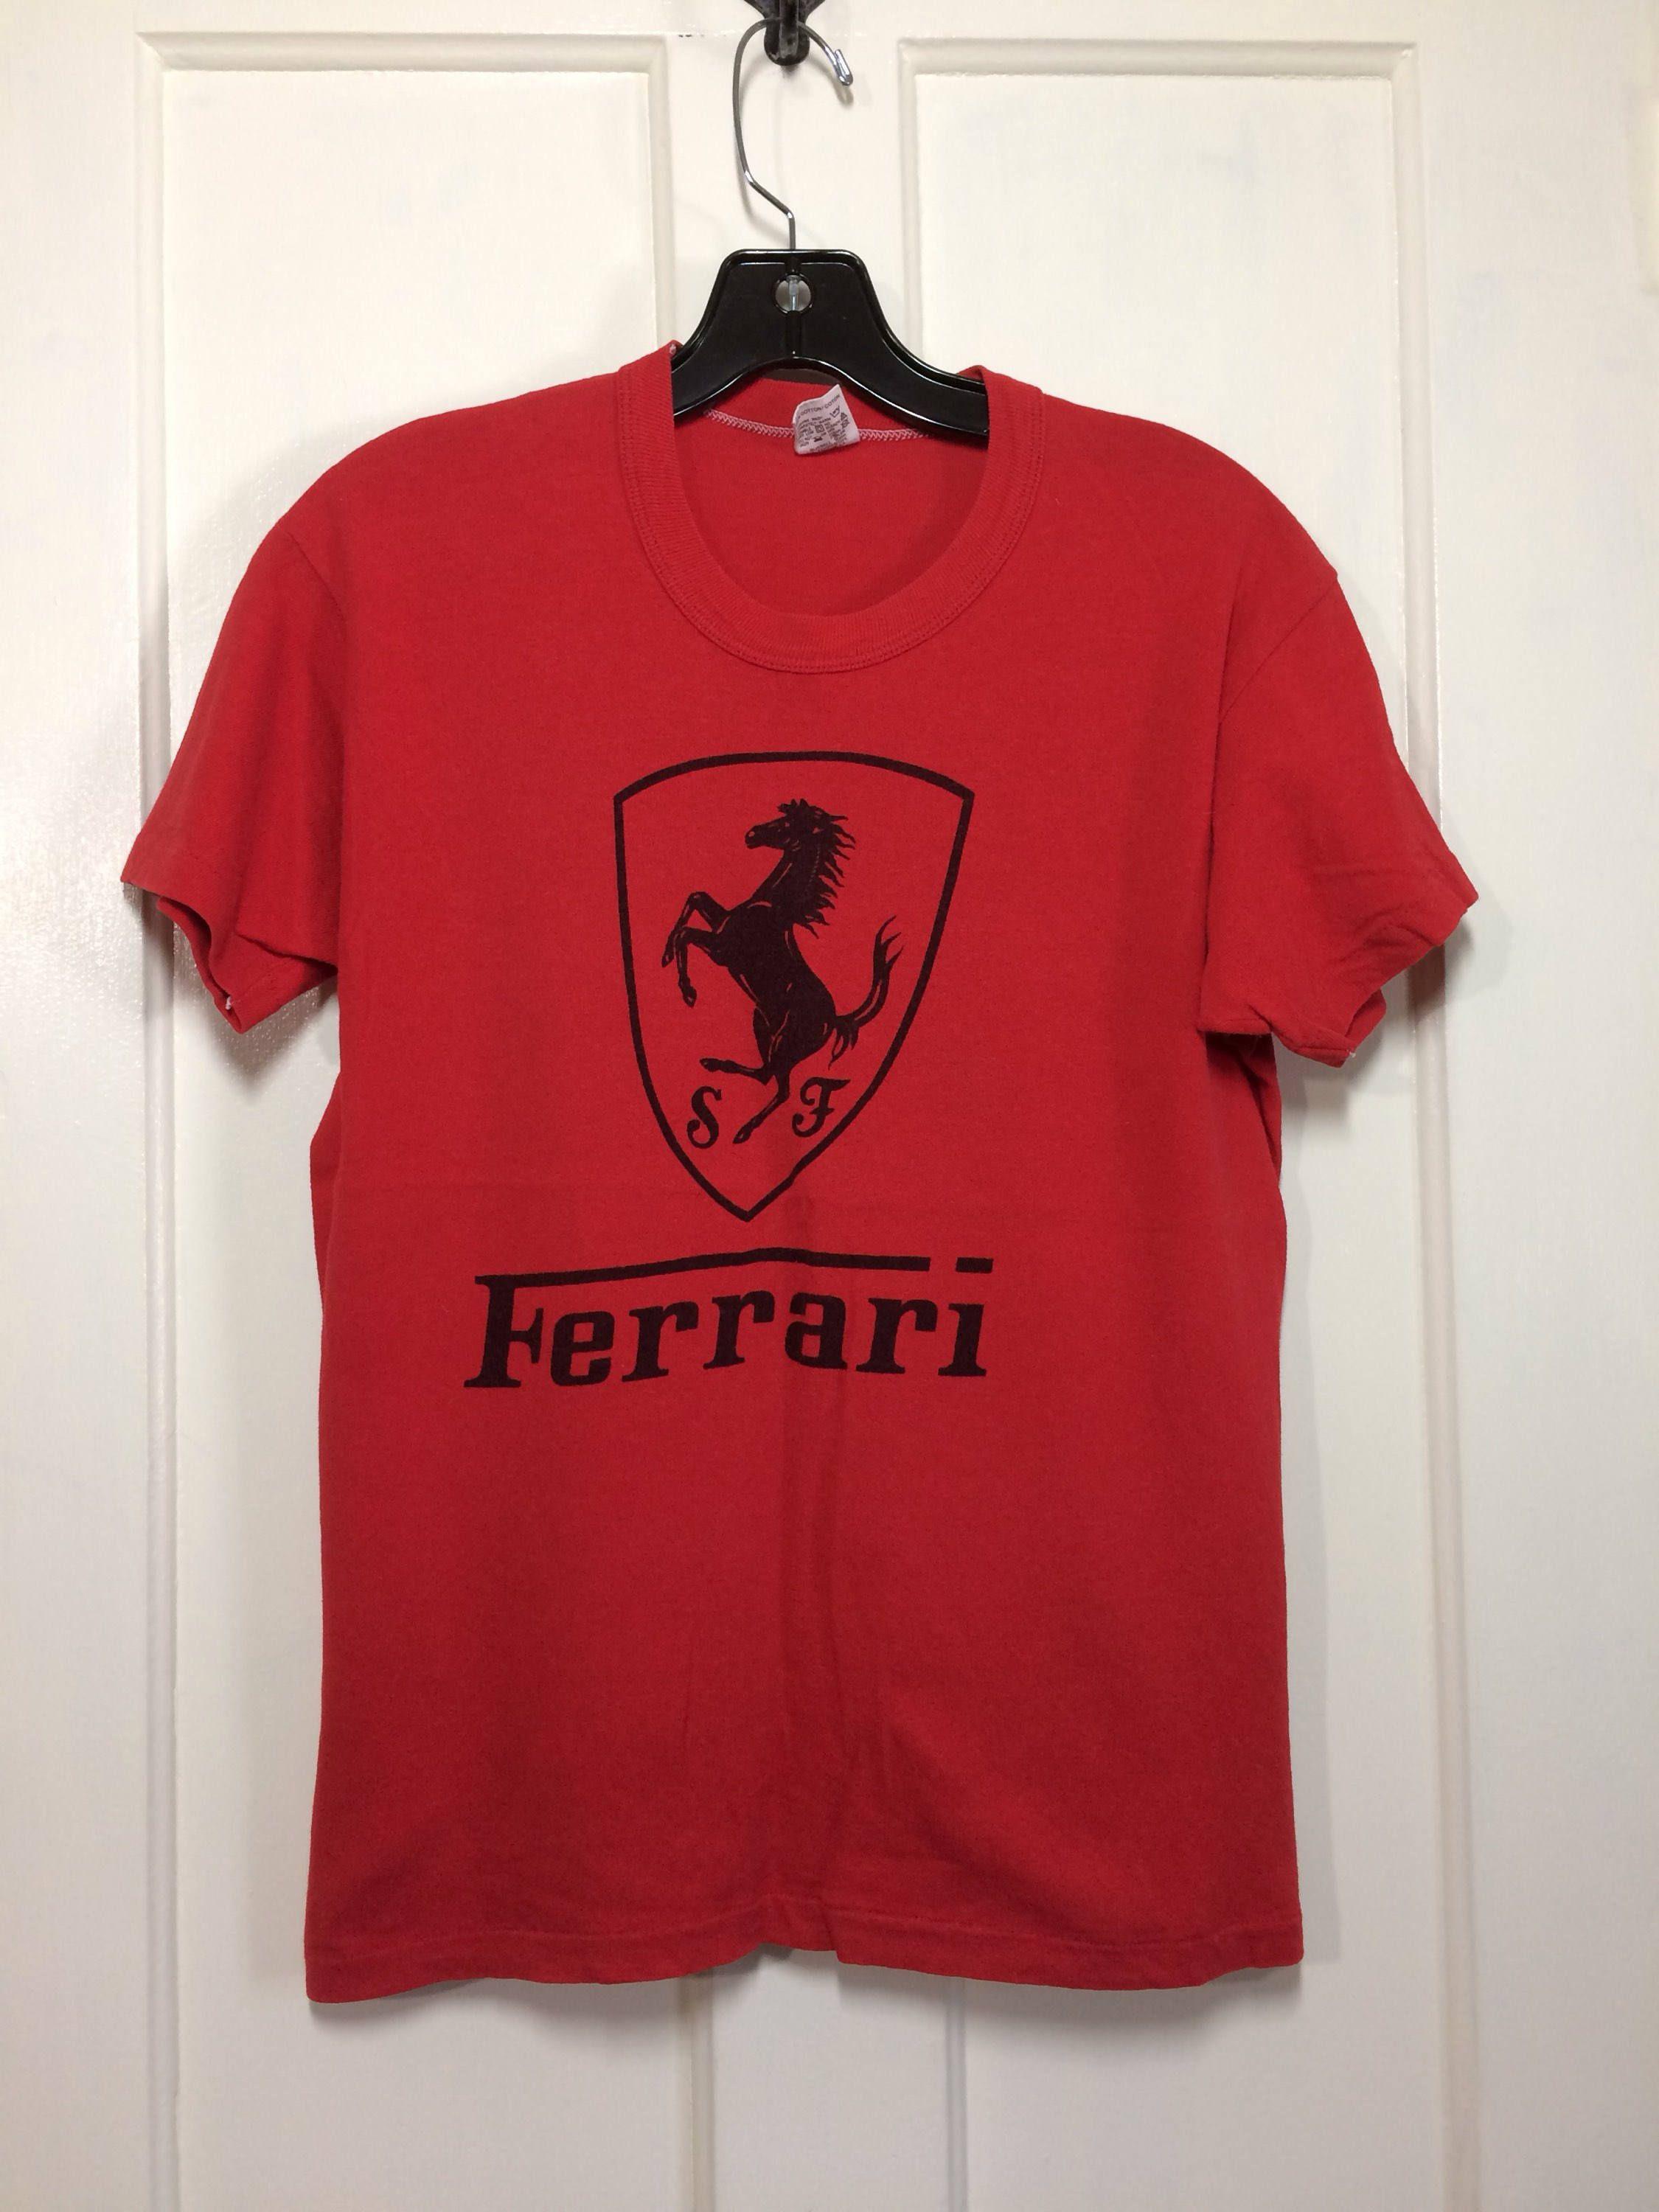 Red Ferrari Horse Logo - 1970's Ferrari horse logo sports car t-shirt size medium 18x23 red ...